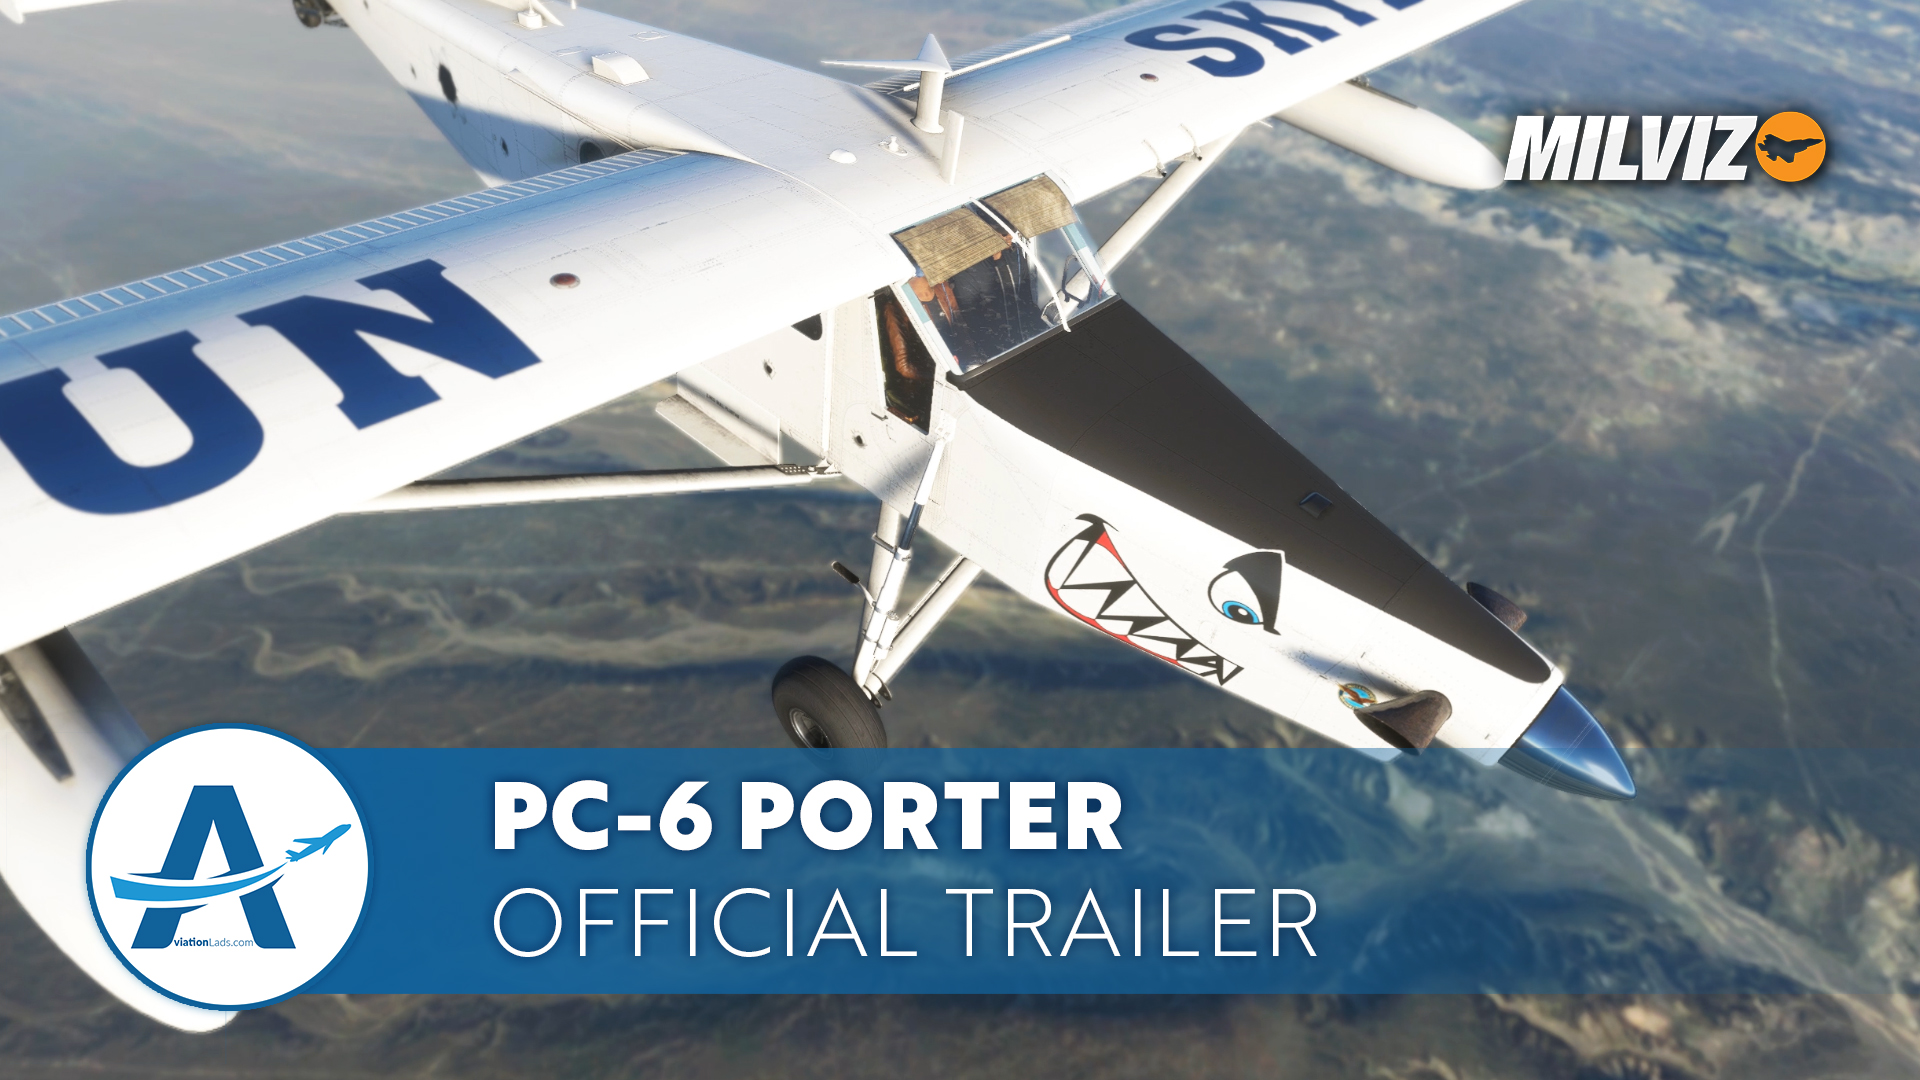 [TRAILER] MilViz PC-6 Porter